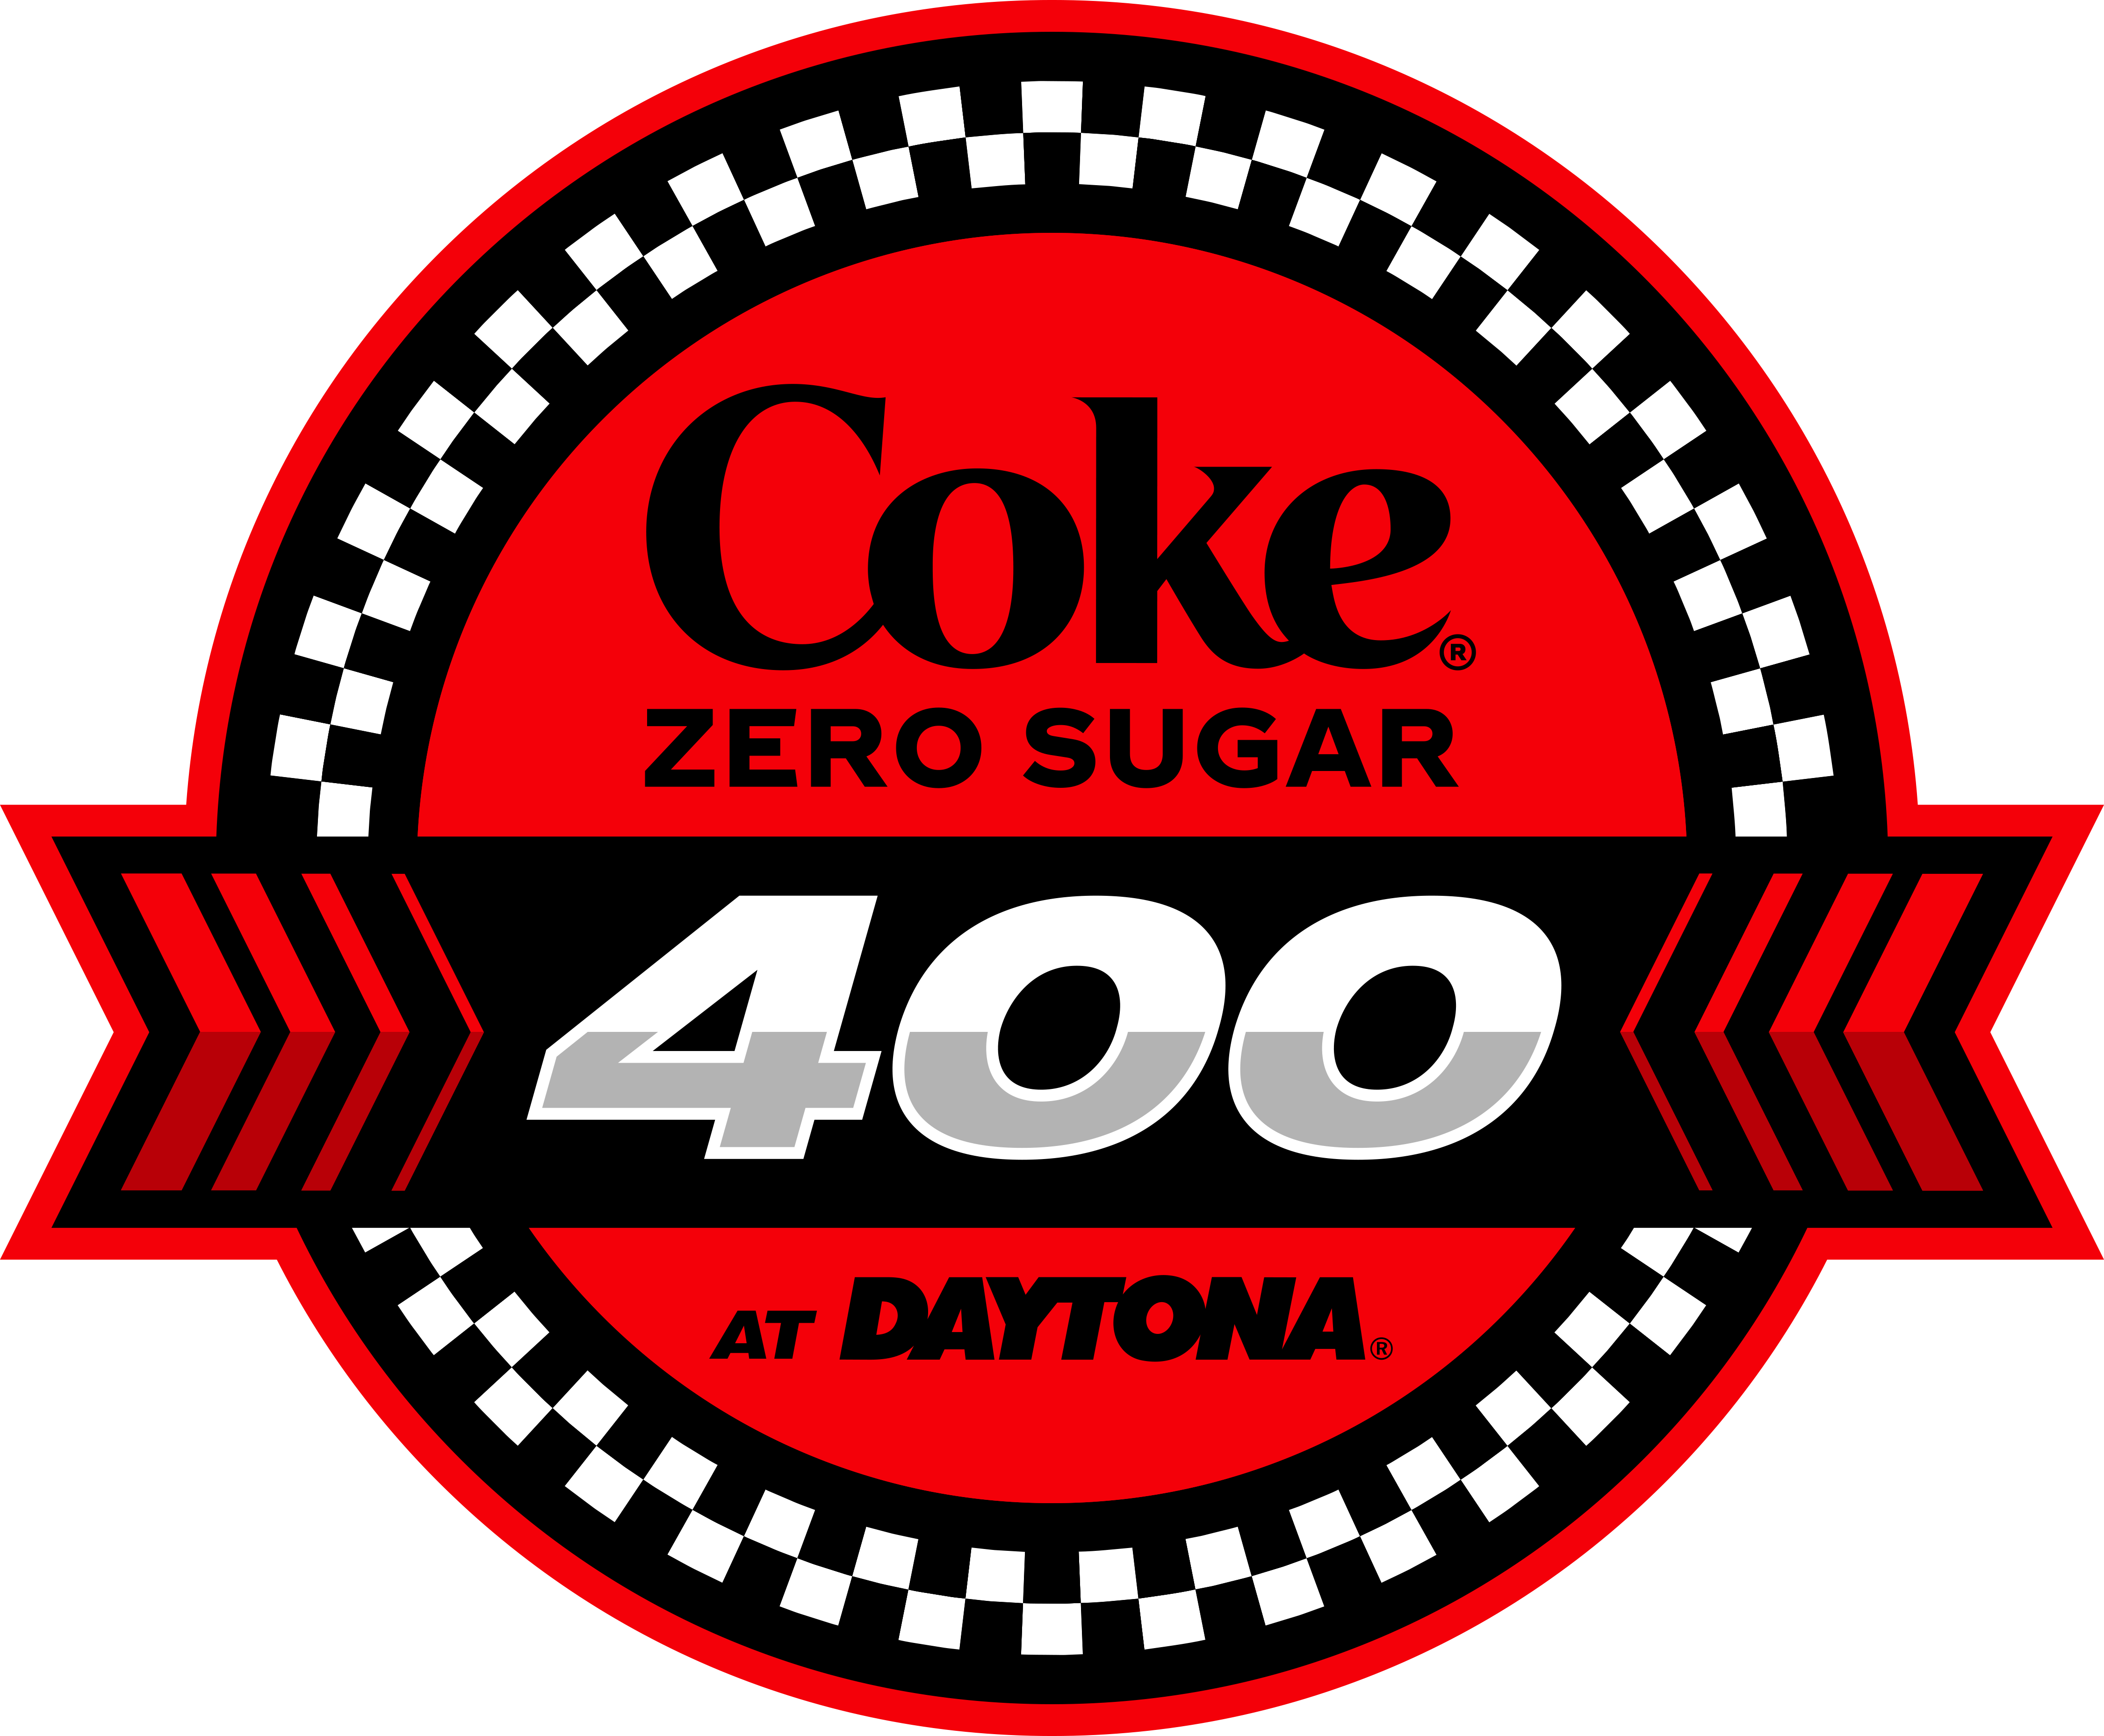 Coke Zero Sugar 400